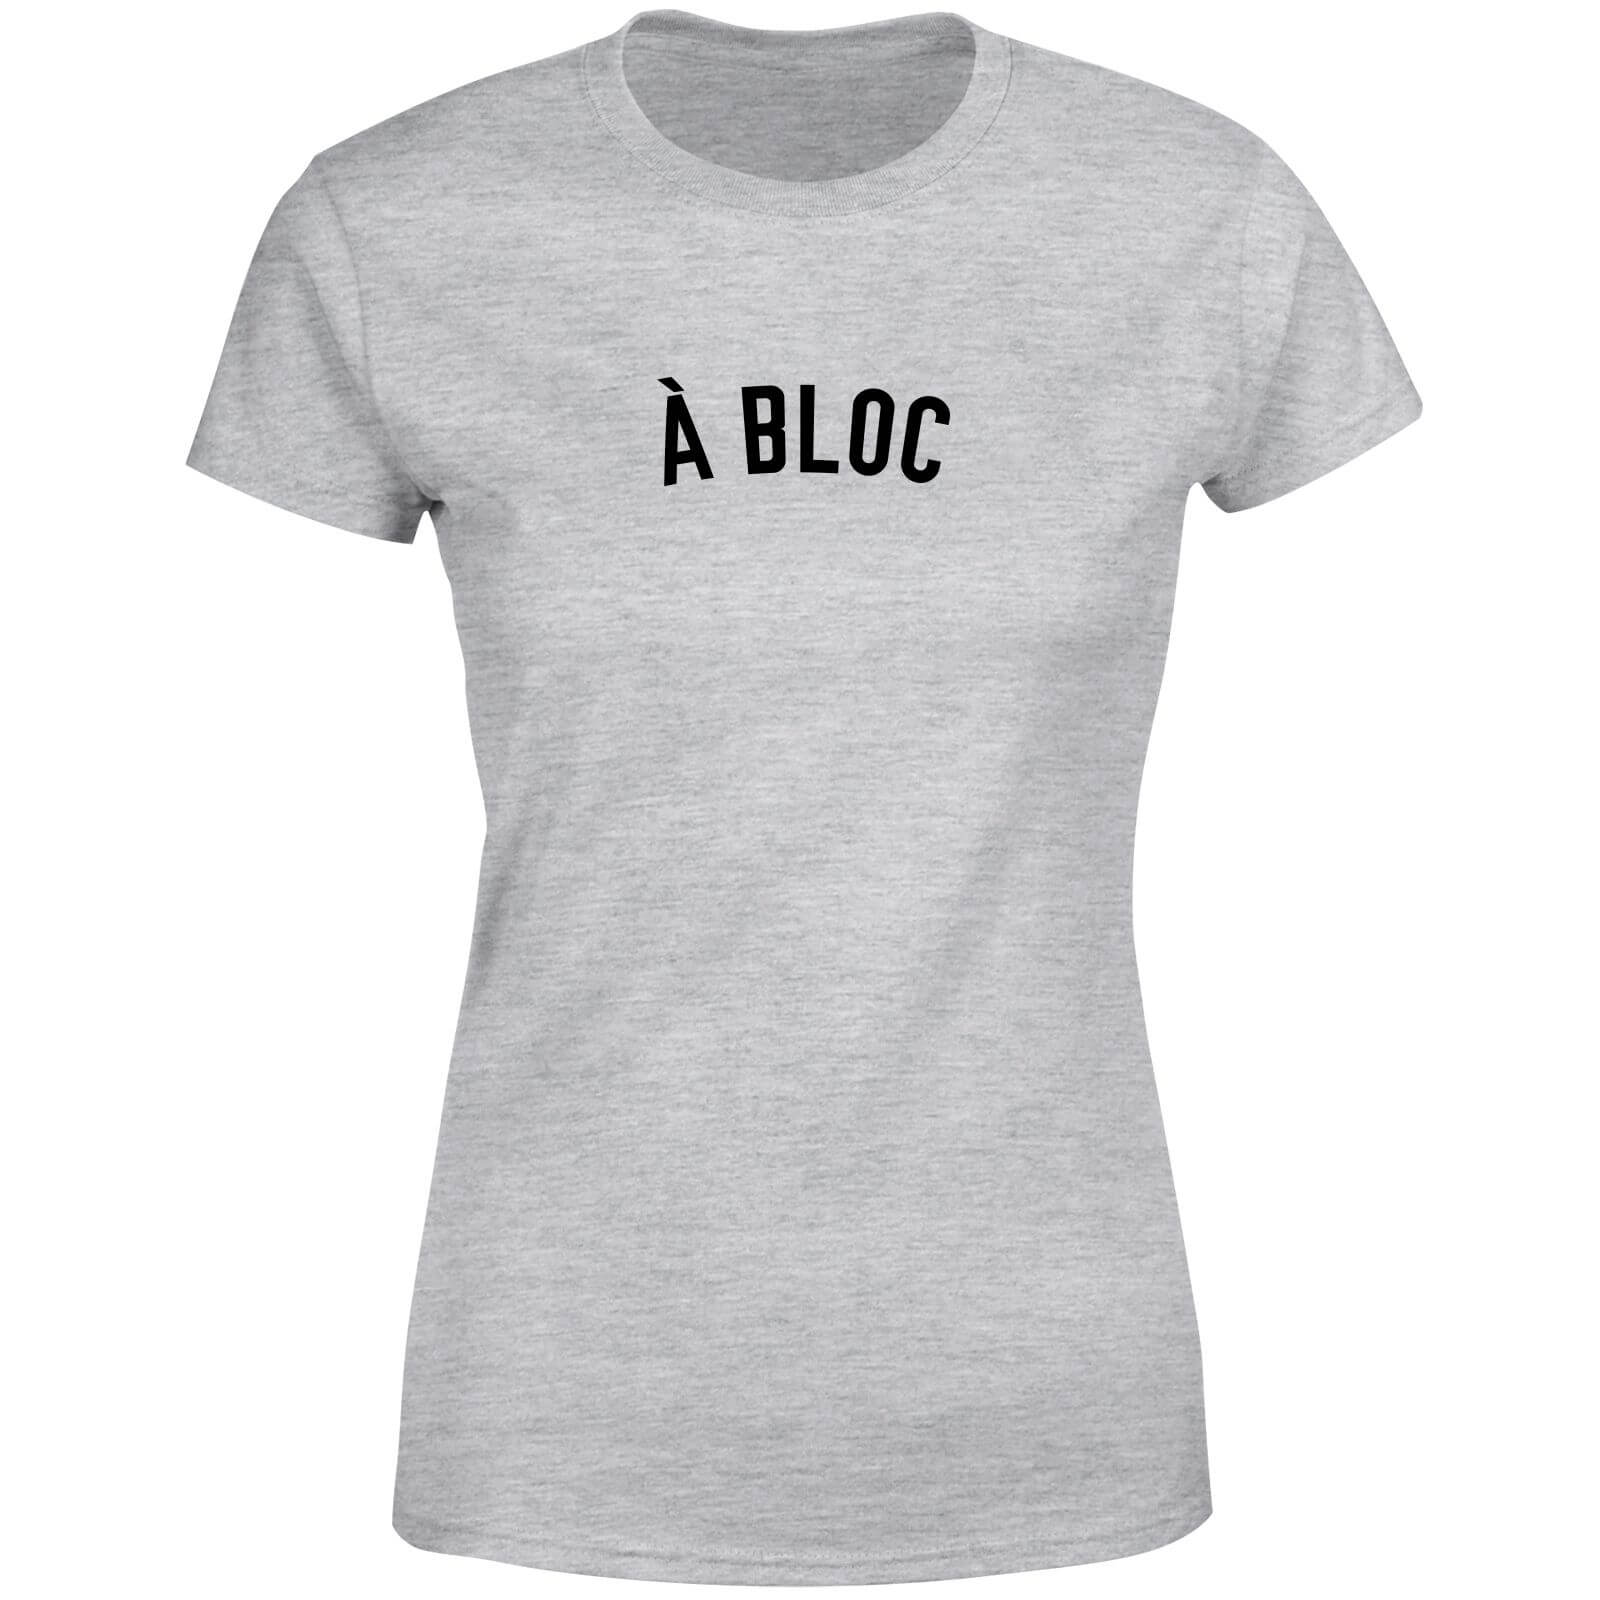 A Bloc Women's T-Shirt - Grey - S - Grey